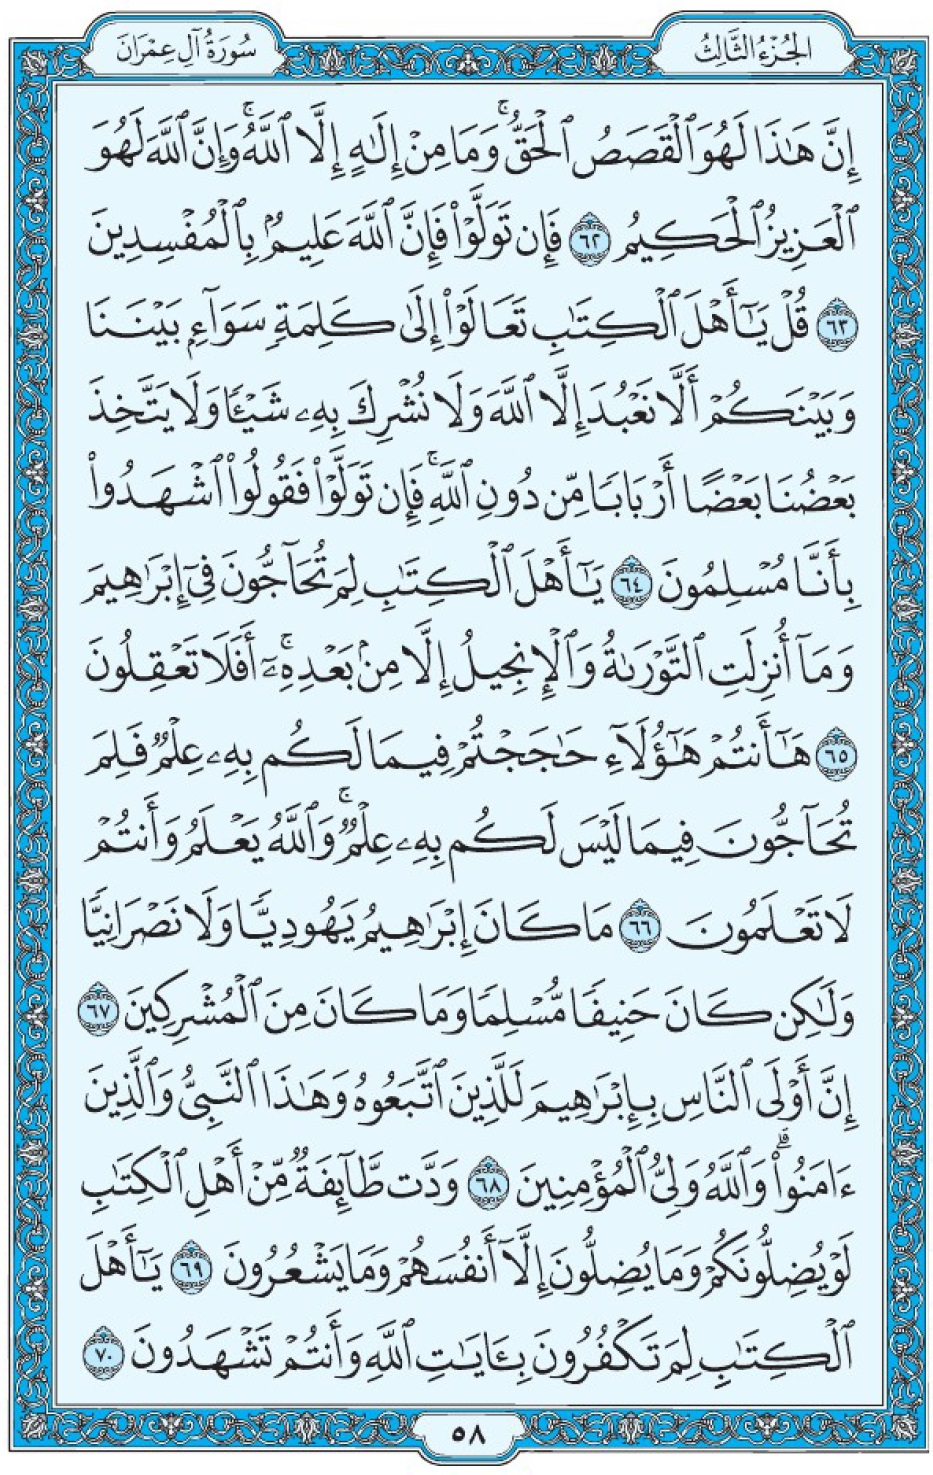 Коран Мединский мусхаф страница 58, Али Имран, аят 62-70